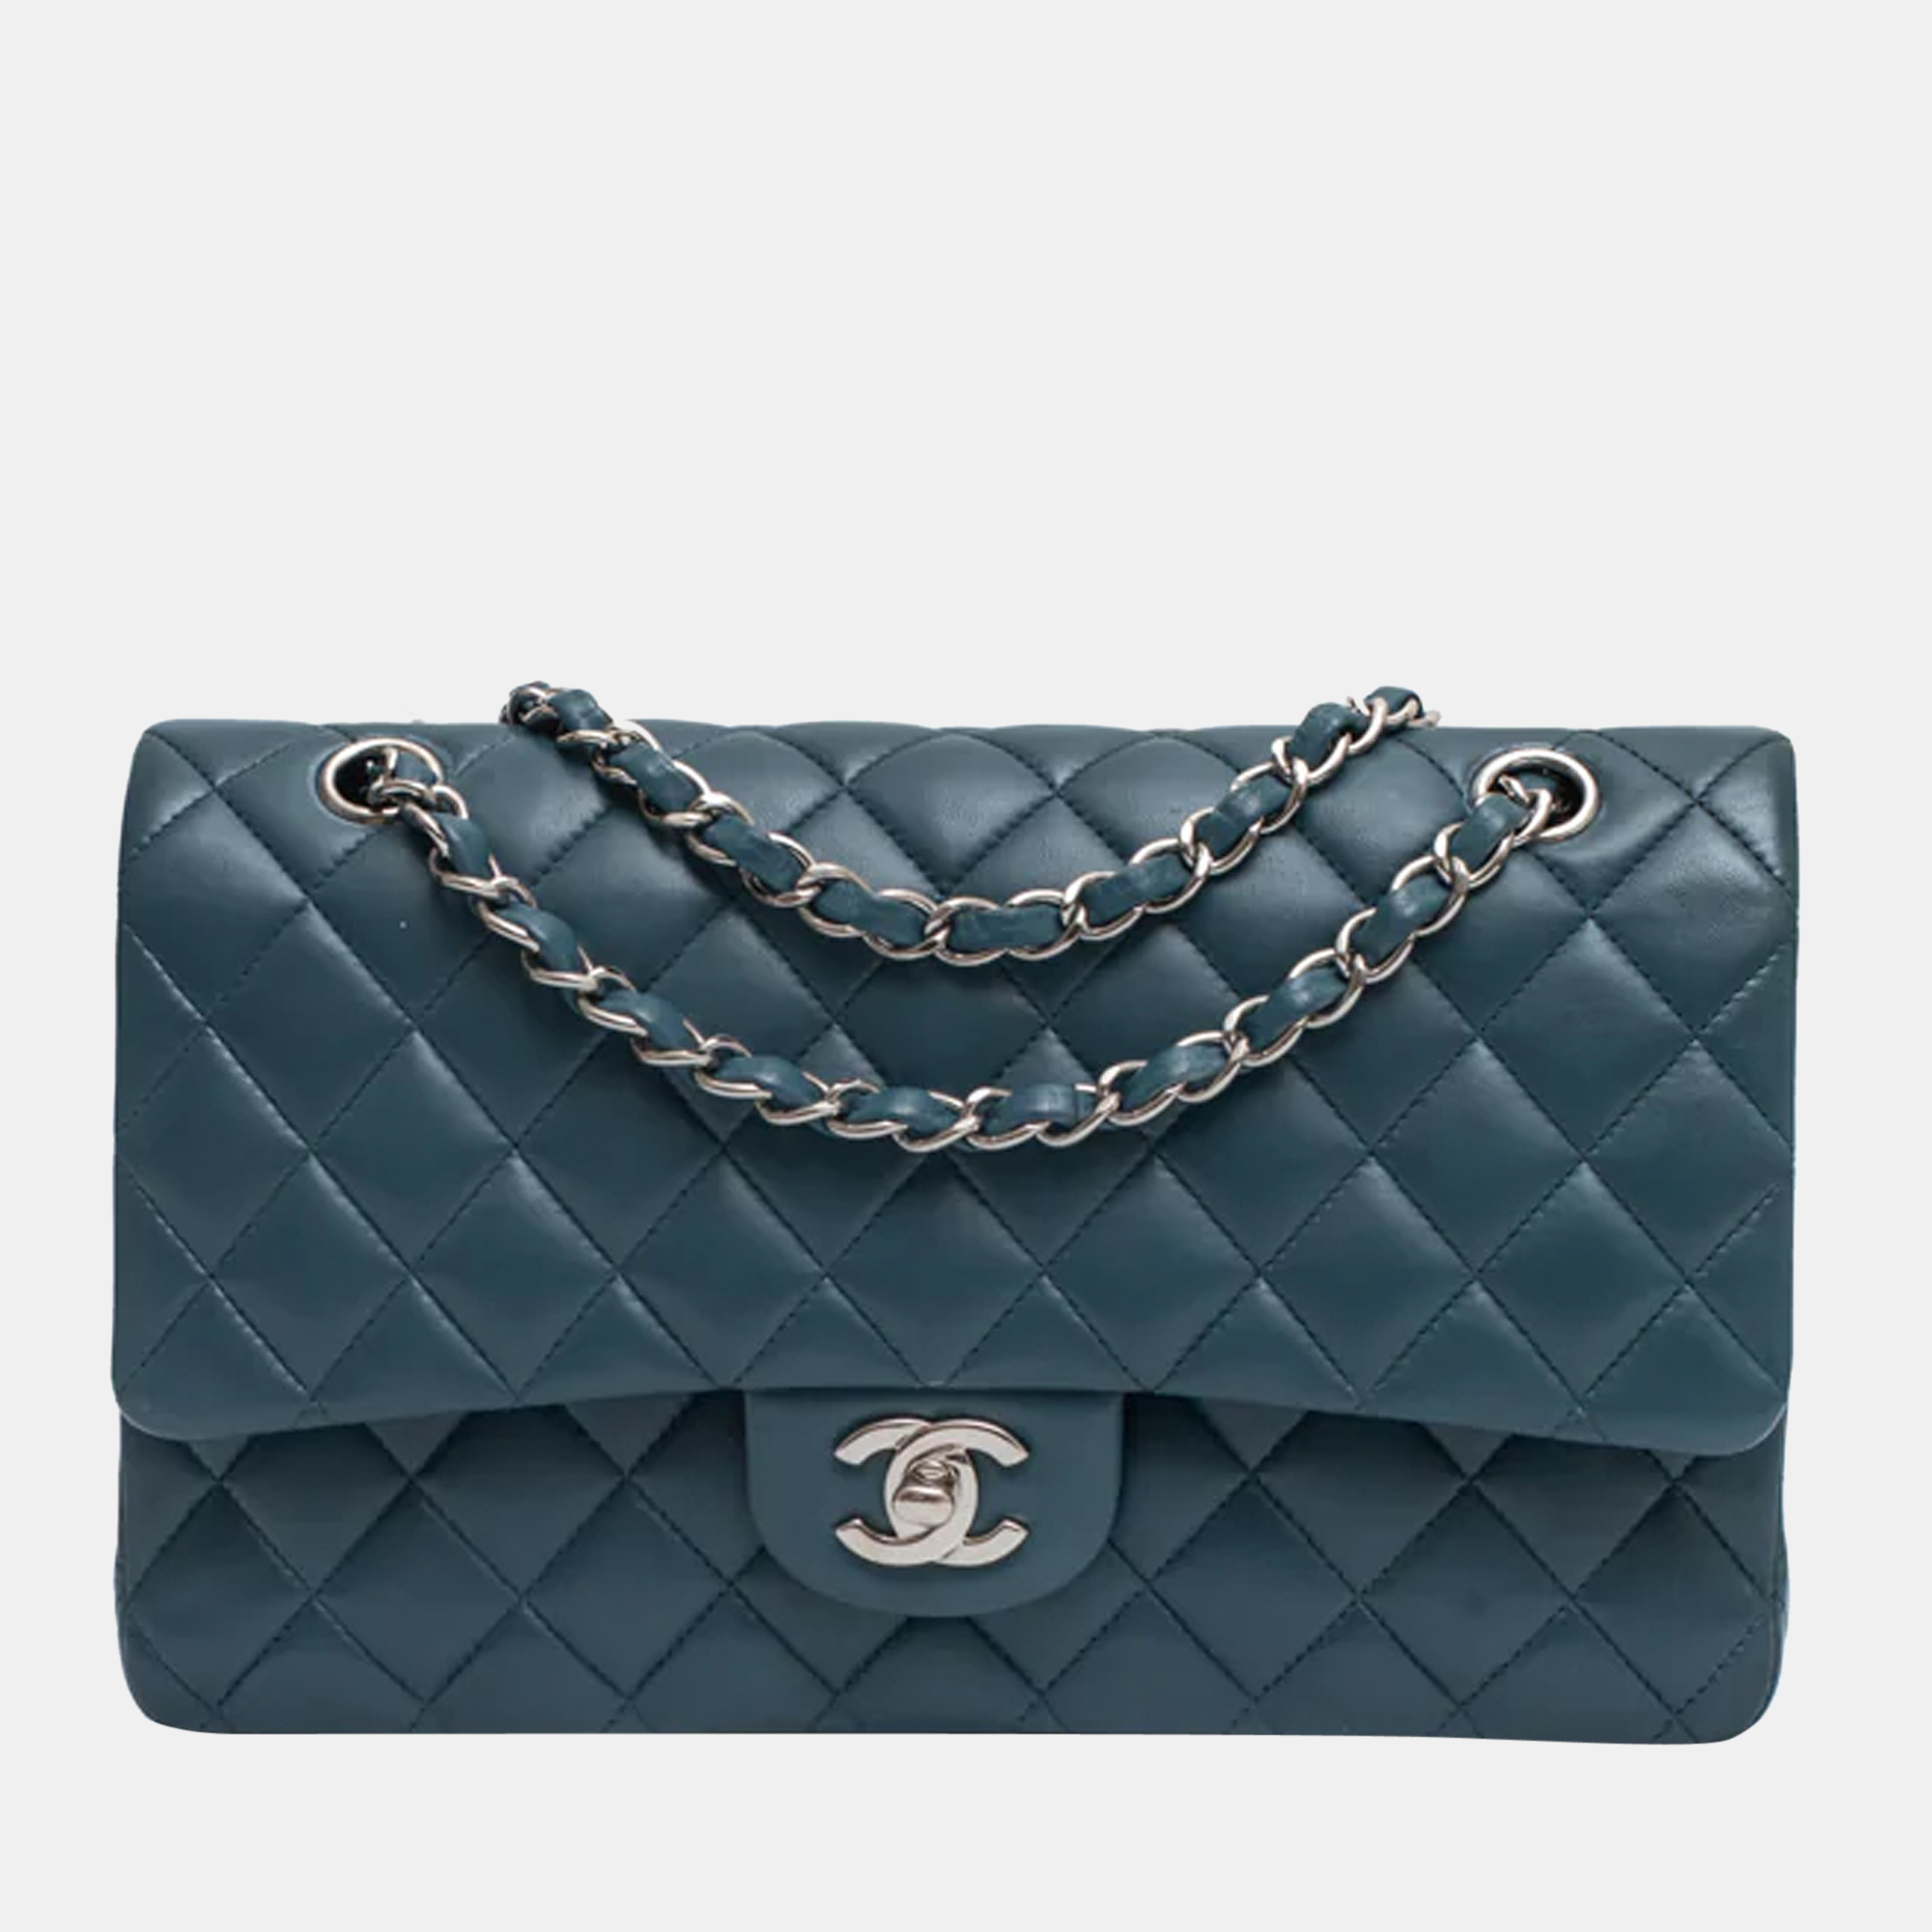 Pre-Owned Chanel Handbags in Pre-Owned Designer Handbags 